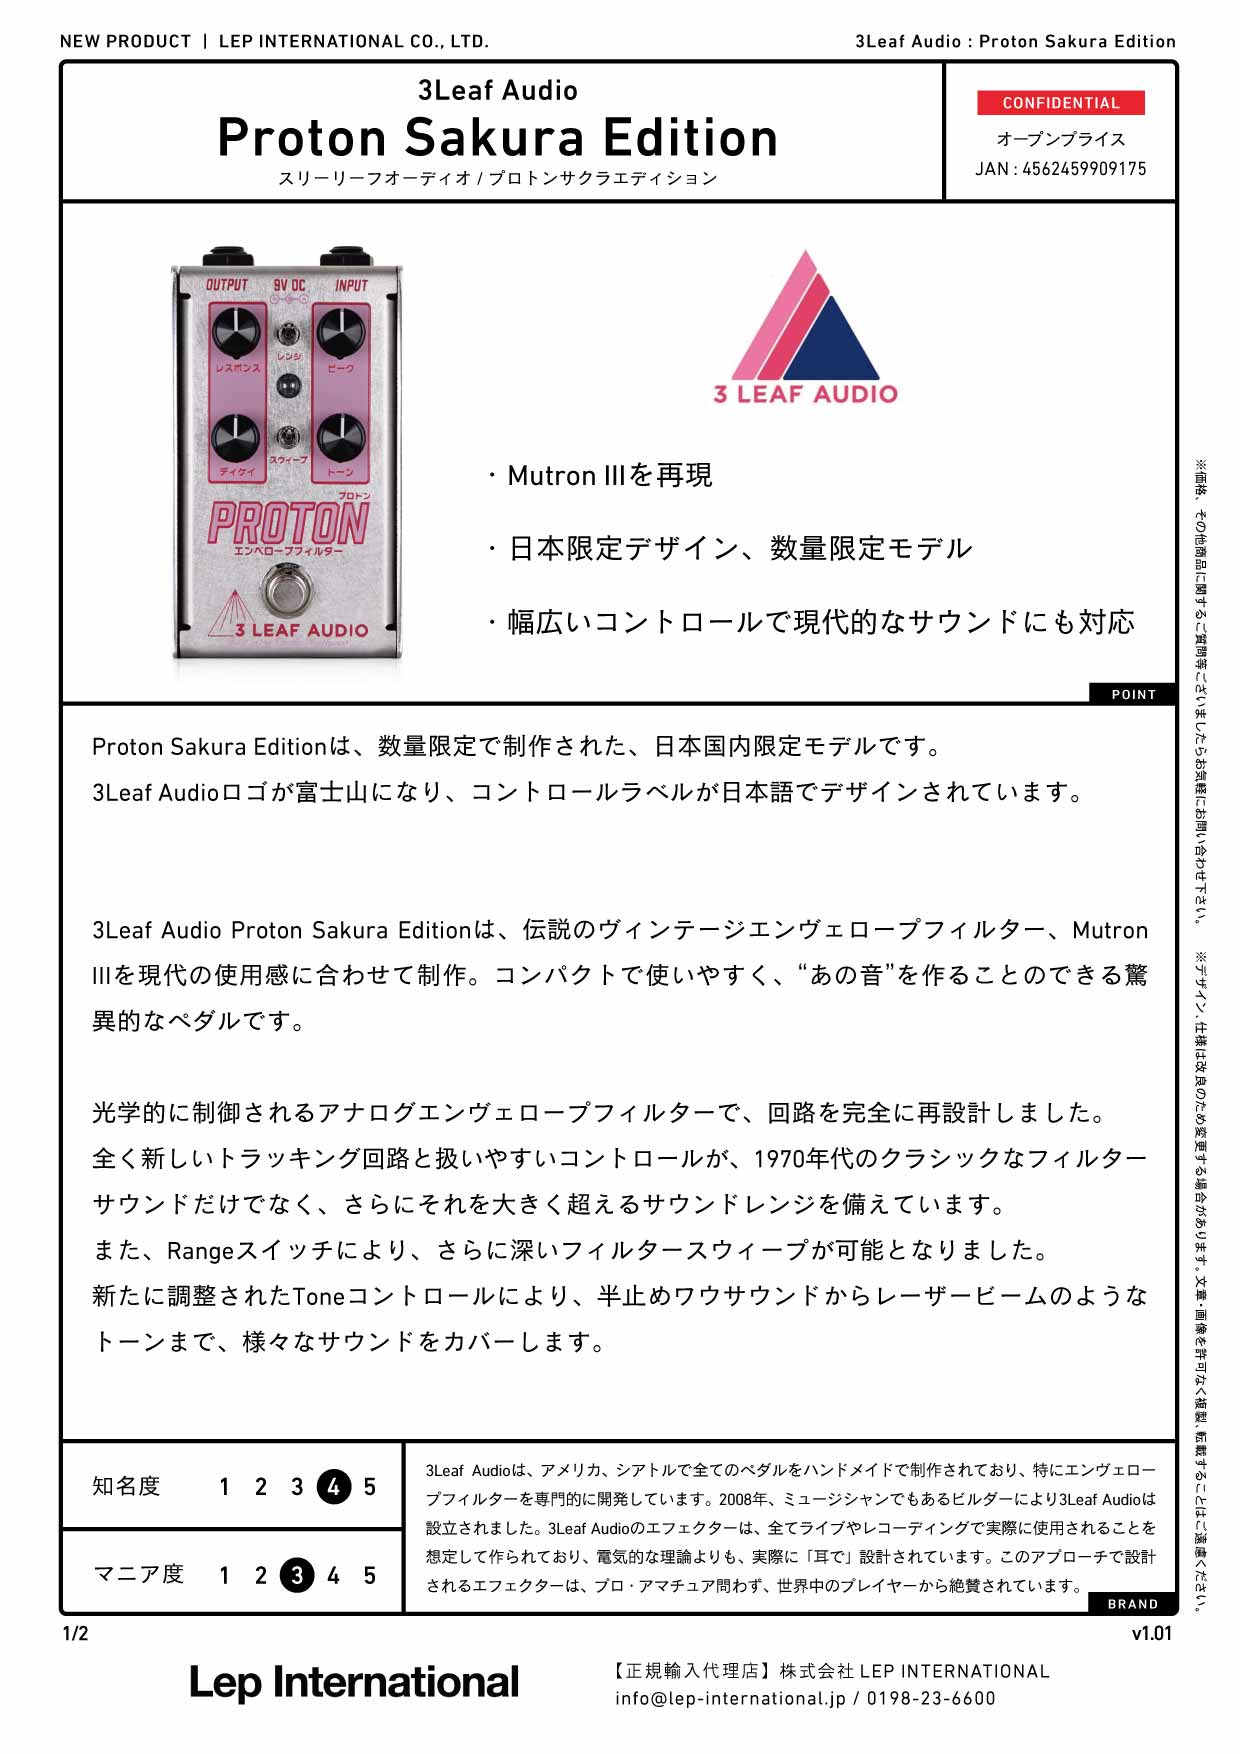 3Leaf Audio / Proton Sakura Edition